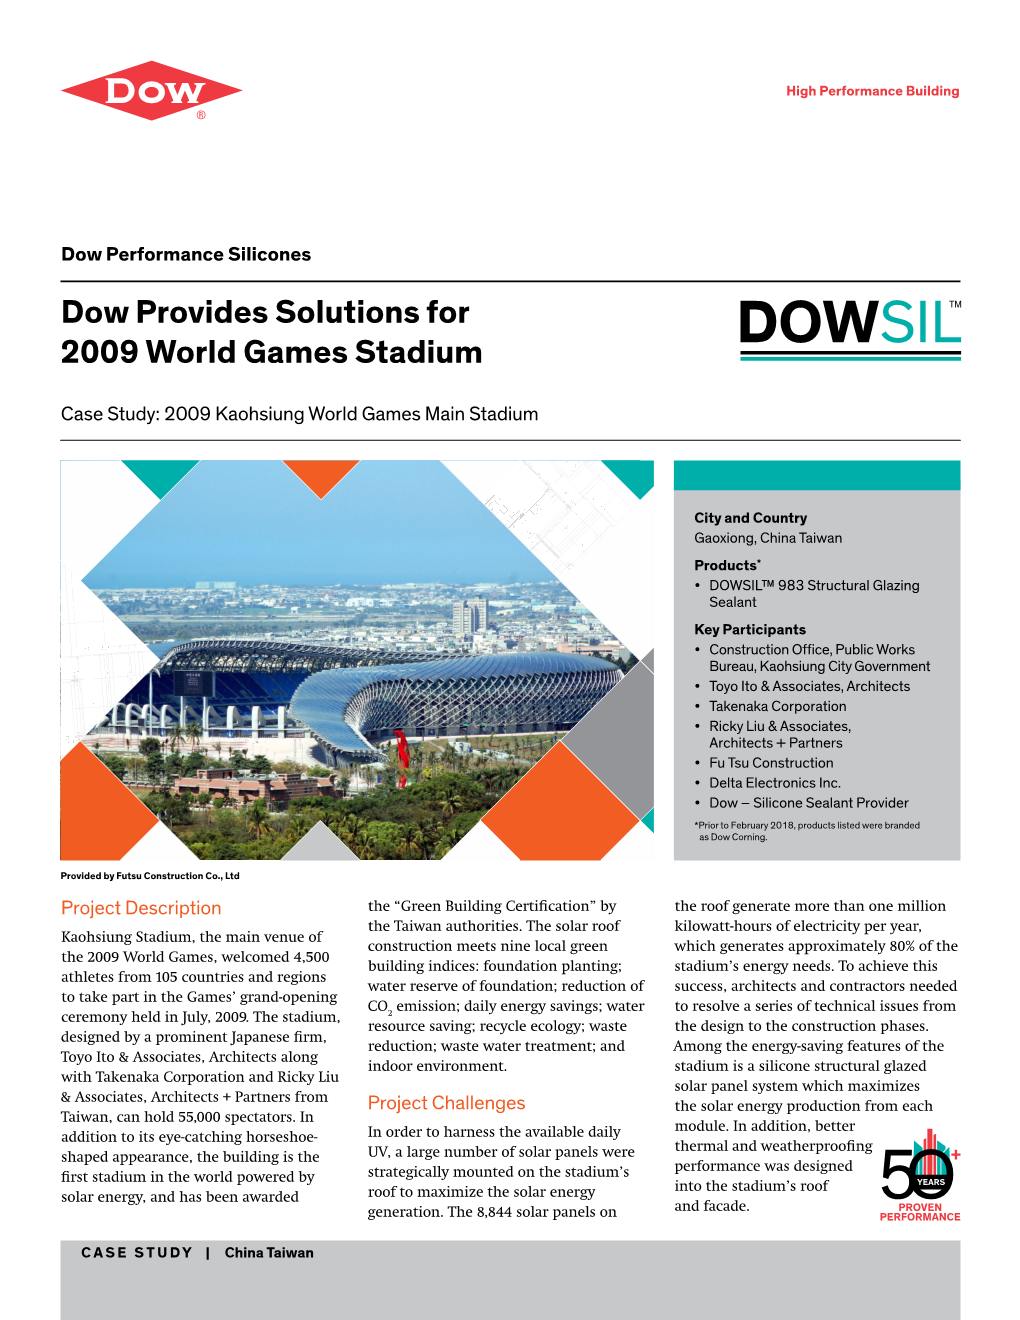 2009 Kaohsiung World Games Main Stadium, Gaoxiong, China Taiwan